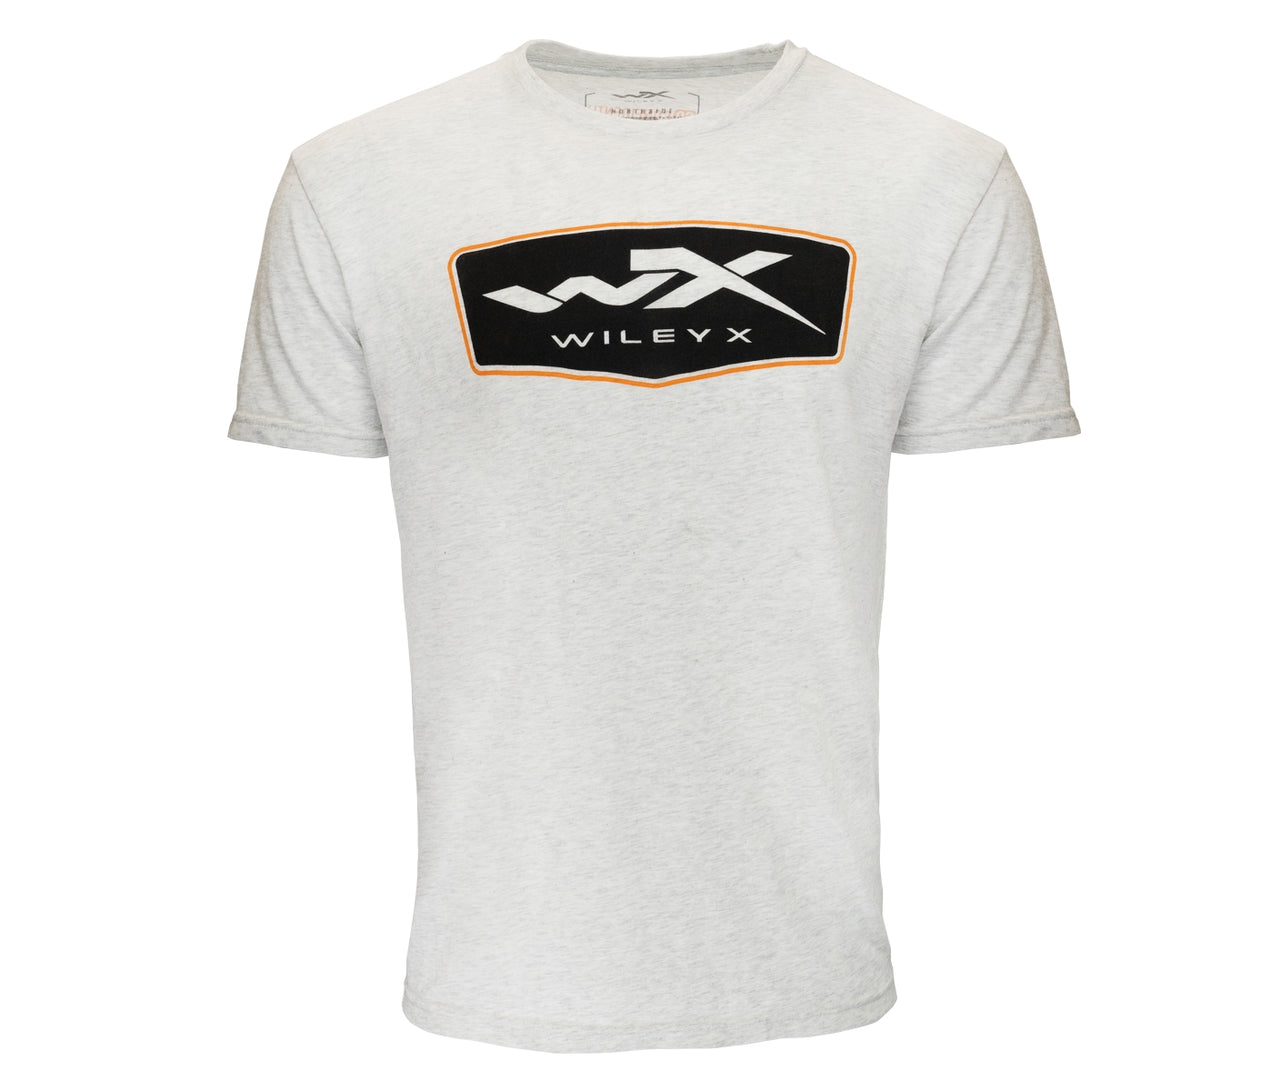 Wiley X T Shirt Northside Shirt